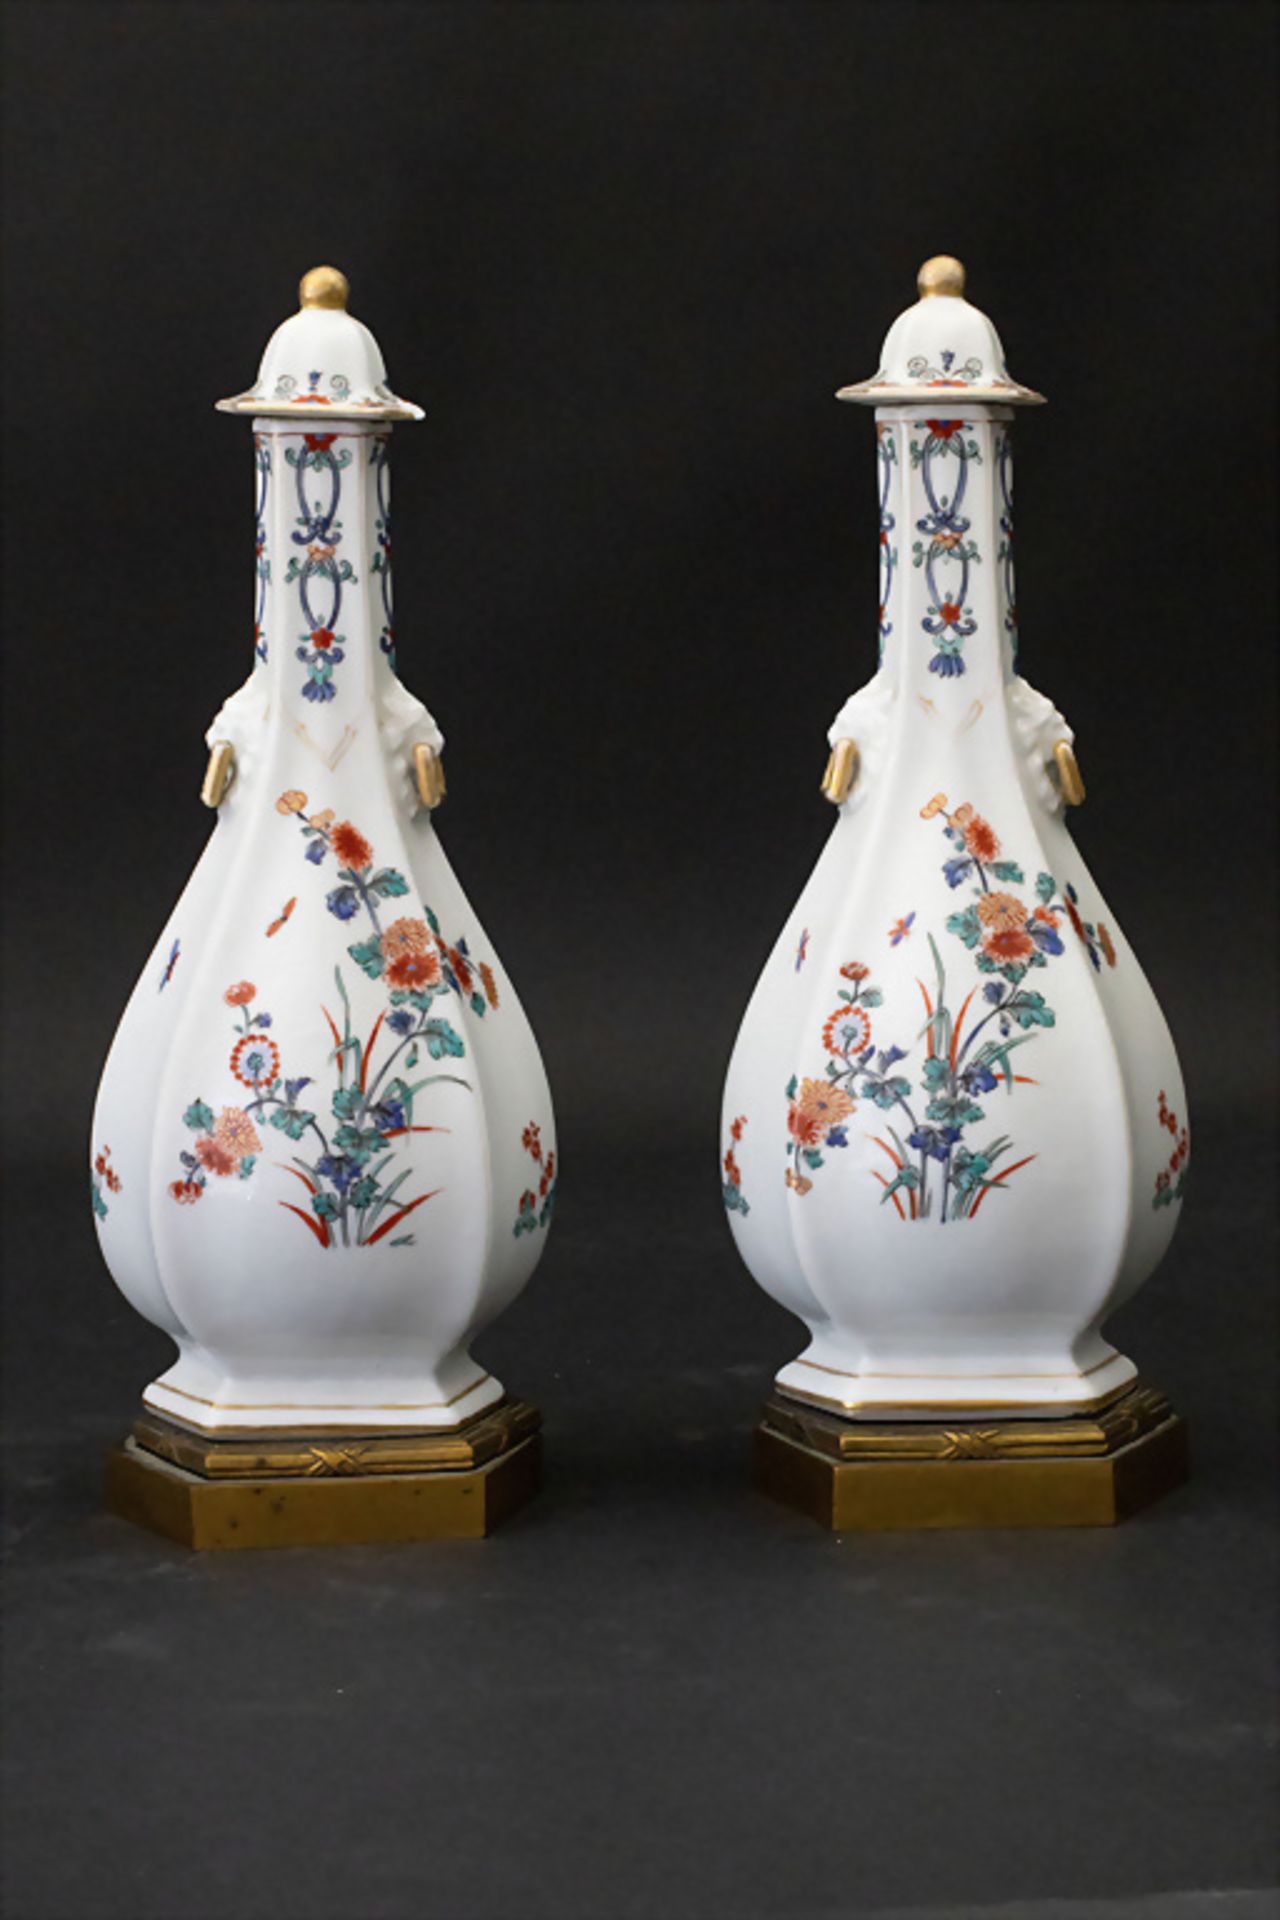 Kakiemon Deckelvasen-Paar / A pair of Kakiemon lidded vases, wohl Meissen oder Chantilly, 18. Jh.